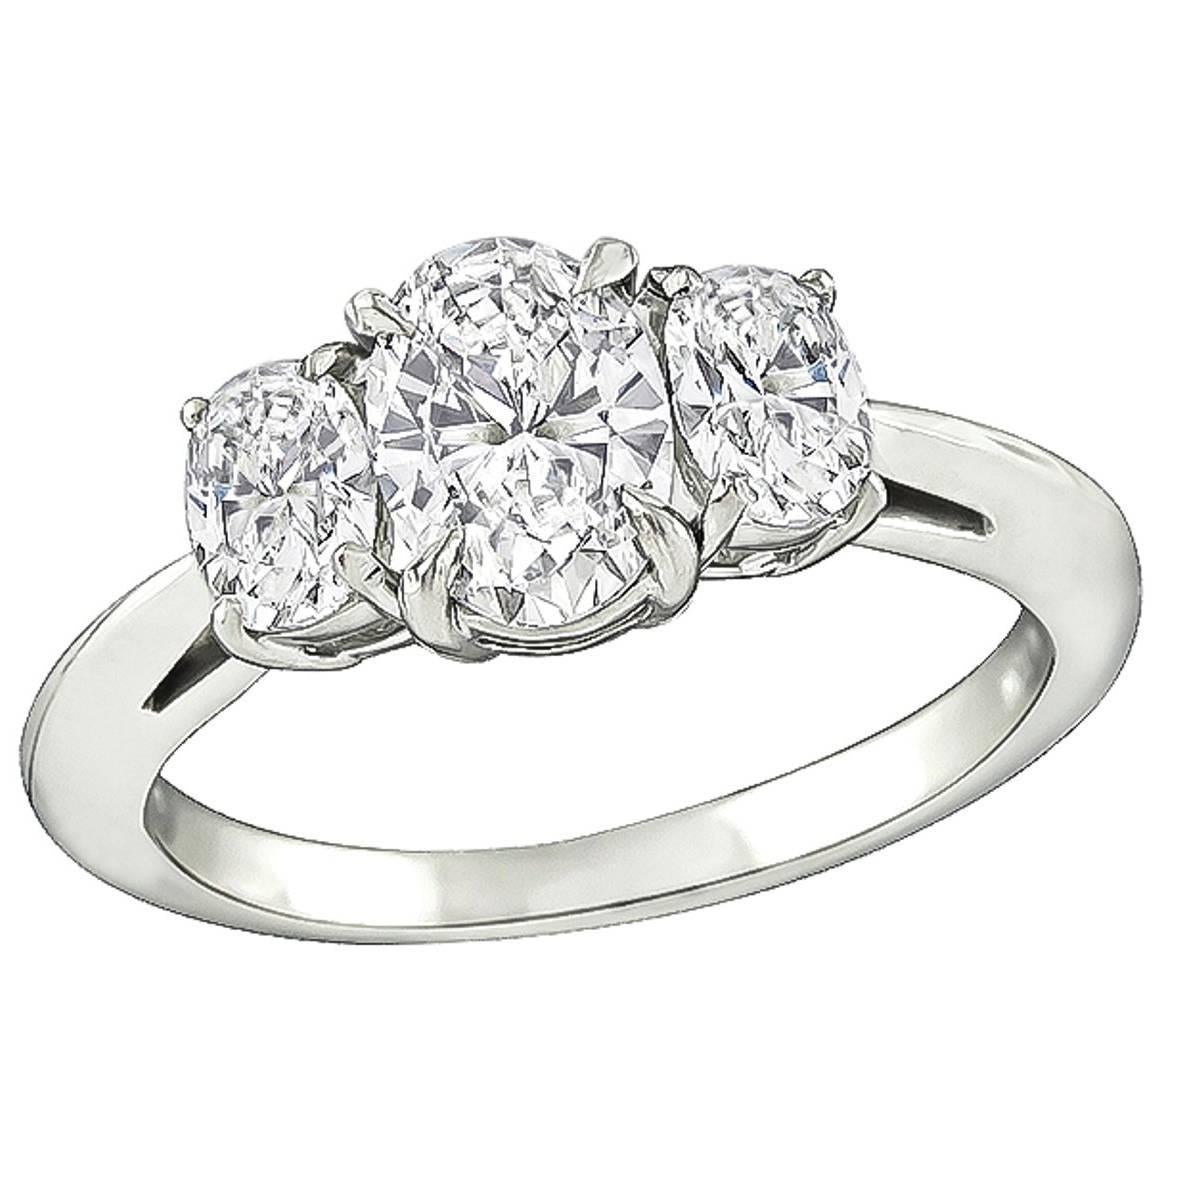 1.01 Carat Oval Cut Diamond Platinum Engagement Ring